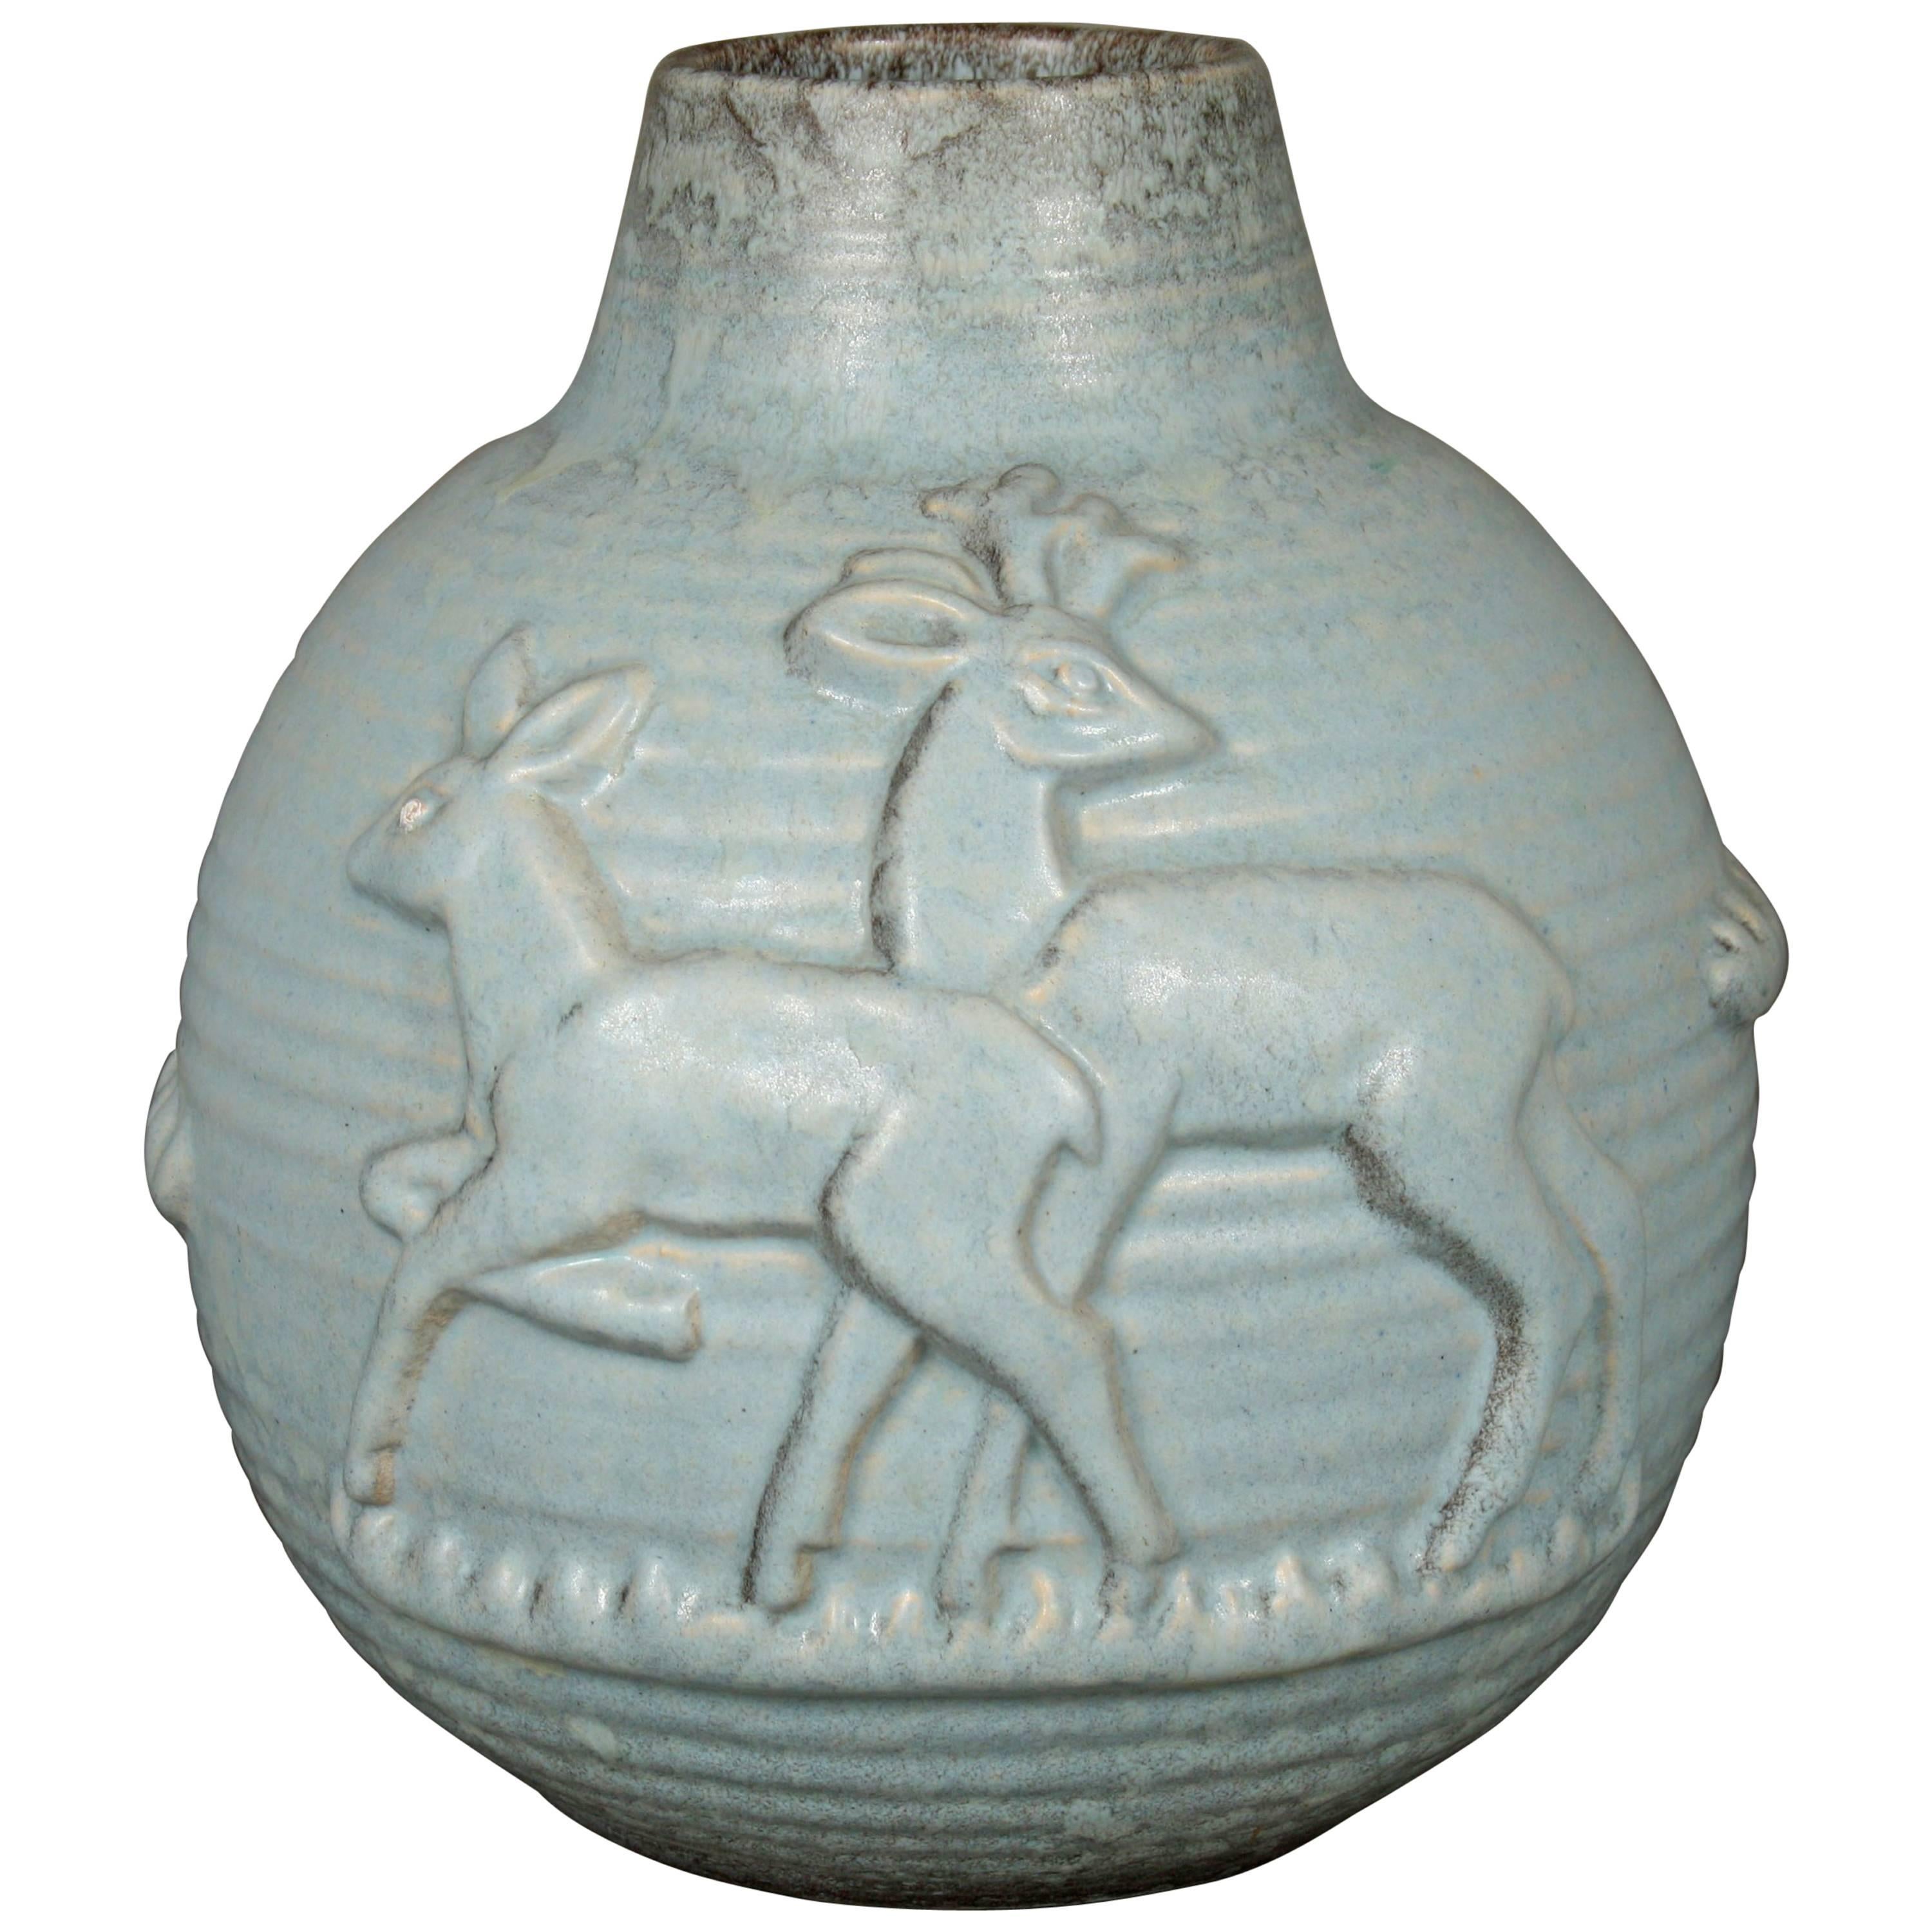 Michael Andersen Stoneware Vase with Light Blue Glaze, 1930s from Denmark For Sale